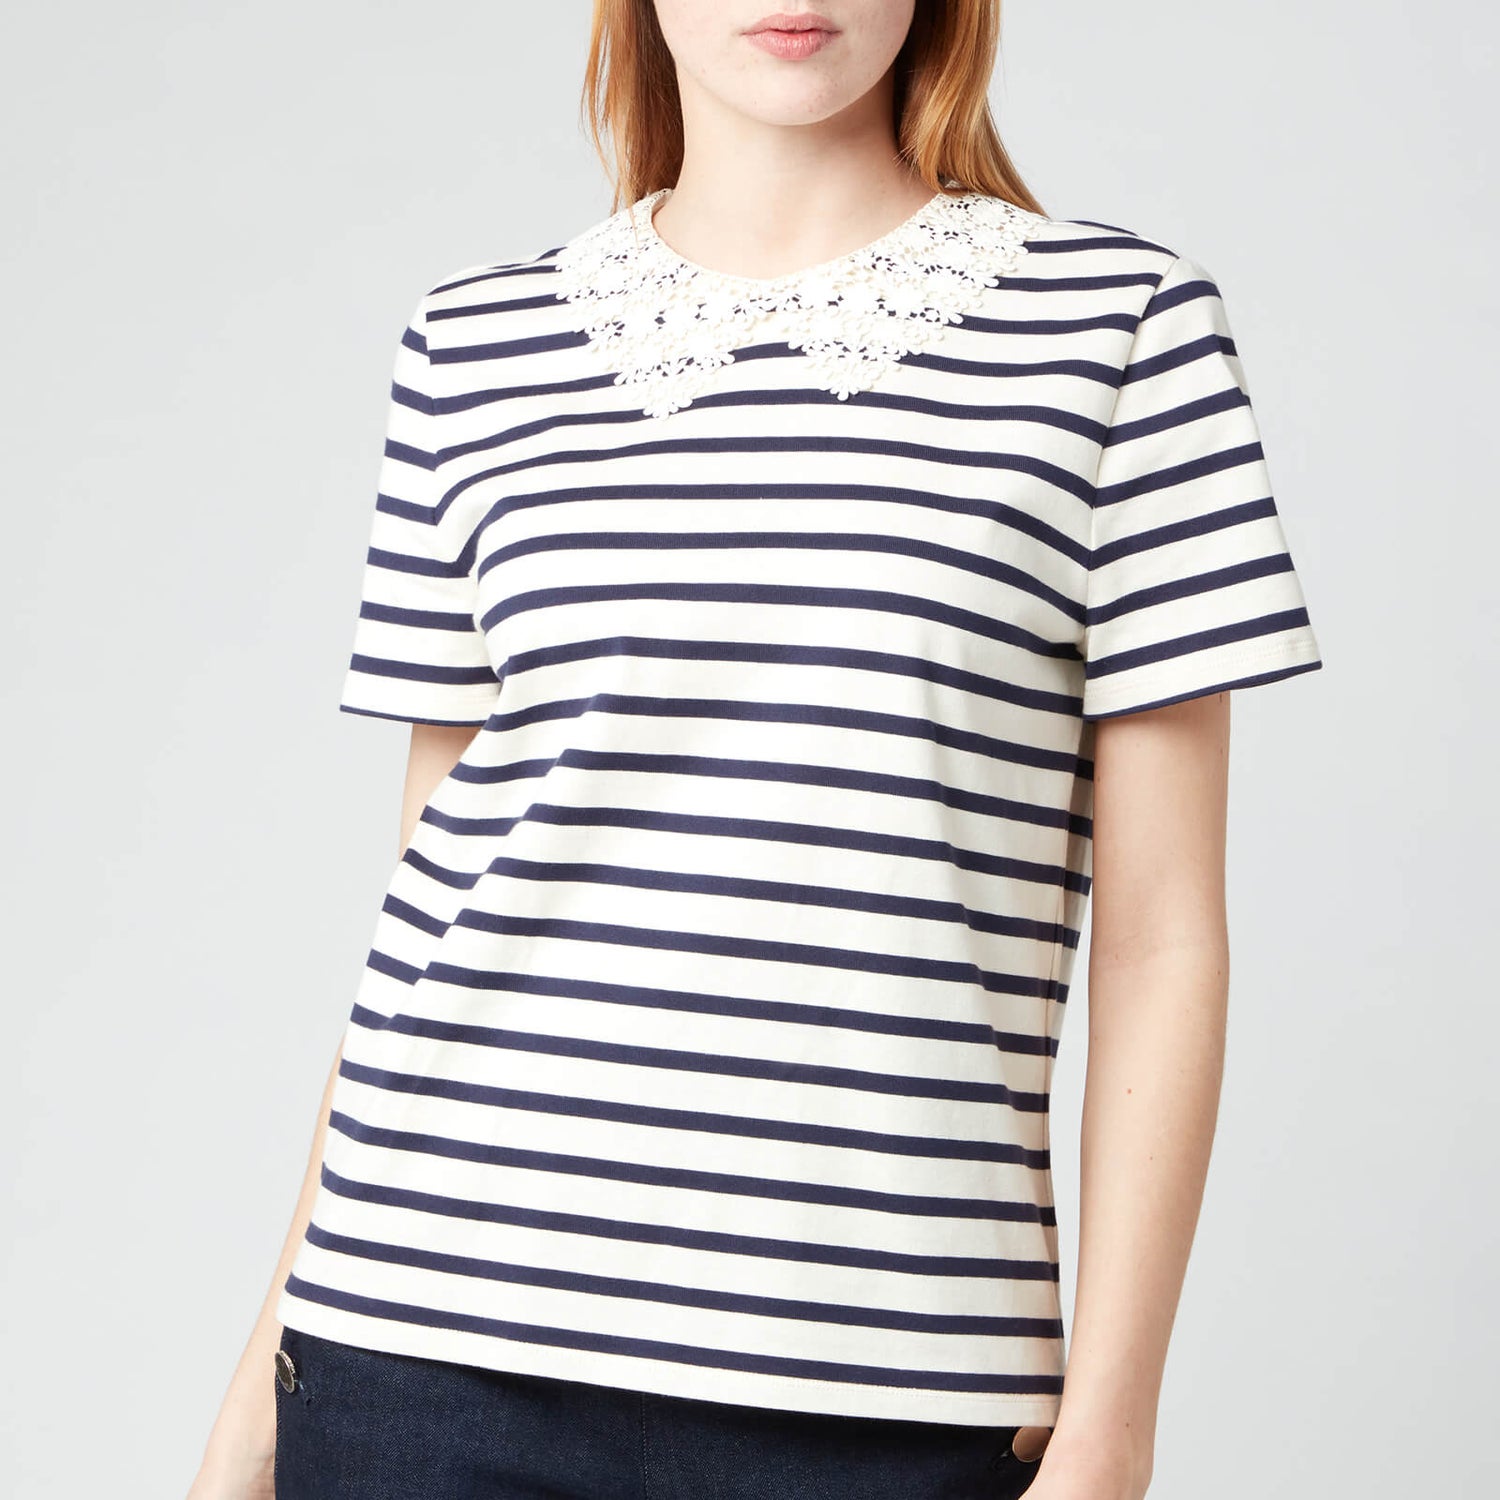 Kate Spade New York Women's Striped Lace Collar T-Shirt - Cream